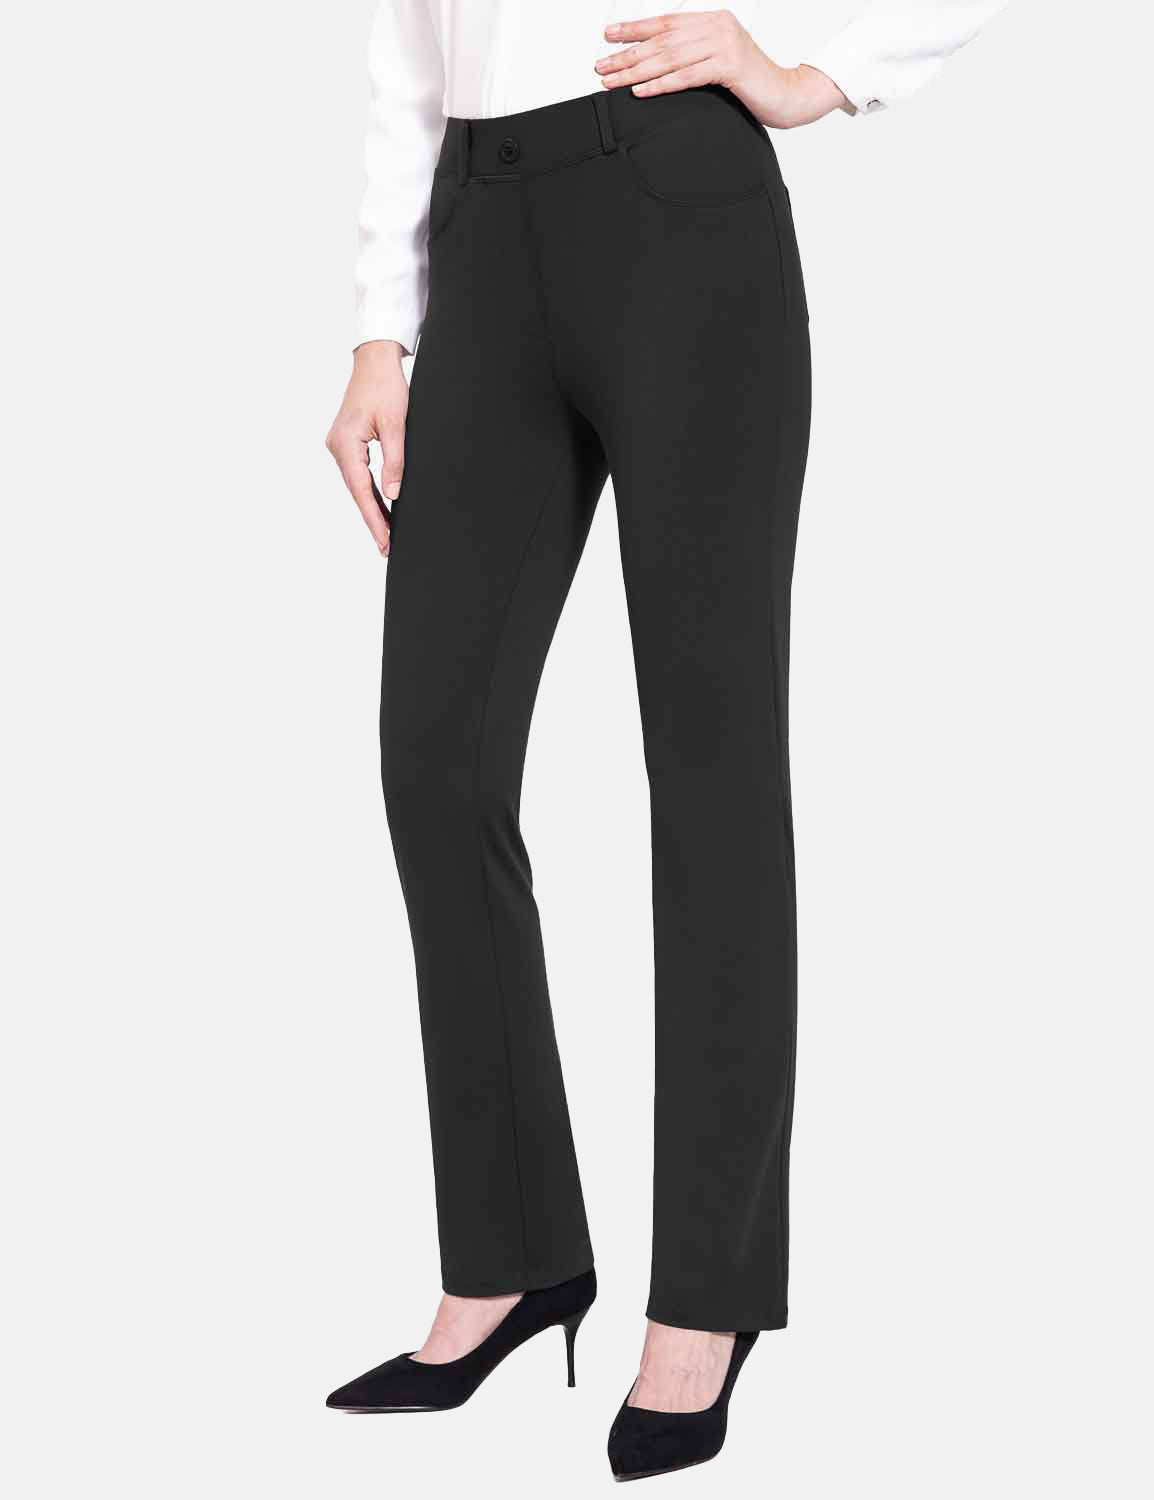 Buy RIZA GARMENTS Black Potli Leggings Women Tight Pants (Color- Black,  Size- 34)